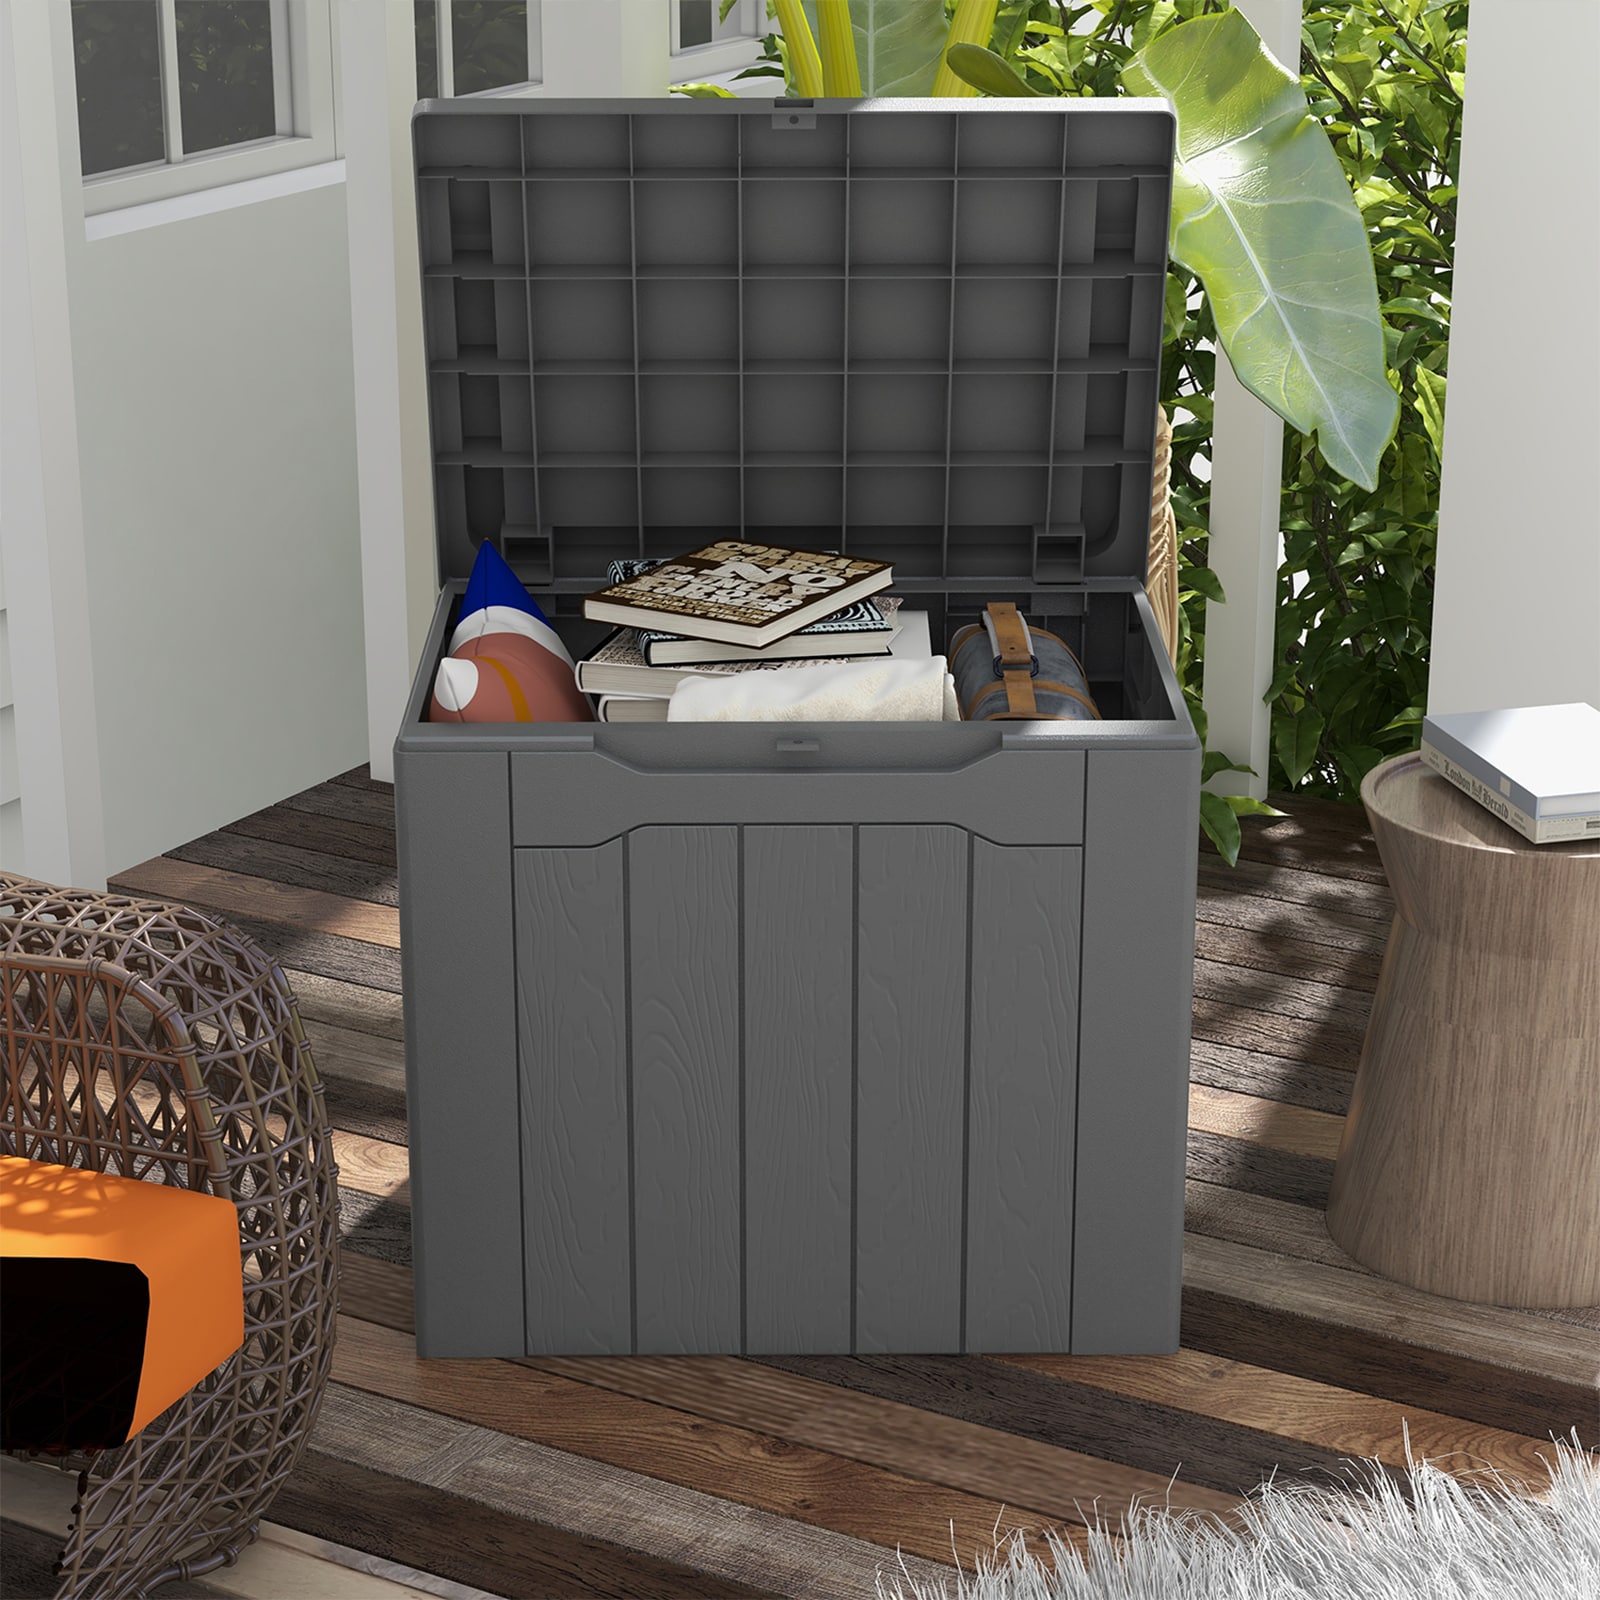 Ainfox 124 Gallon Outdoor Patio Resin Deck Storage Box,Black